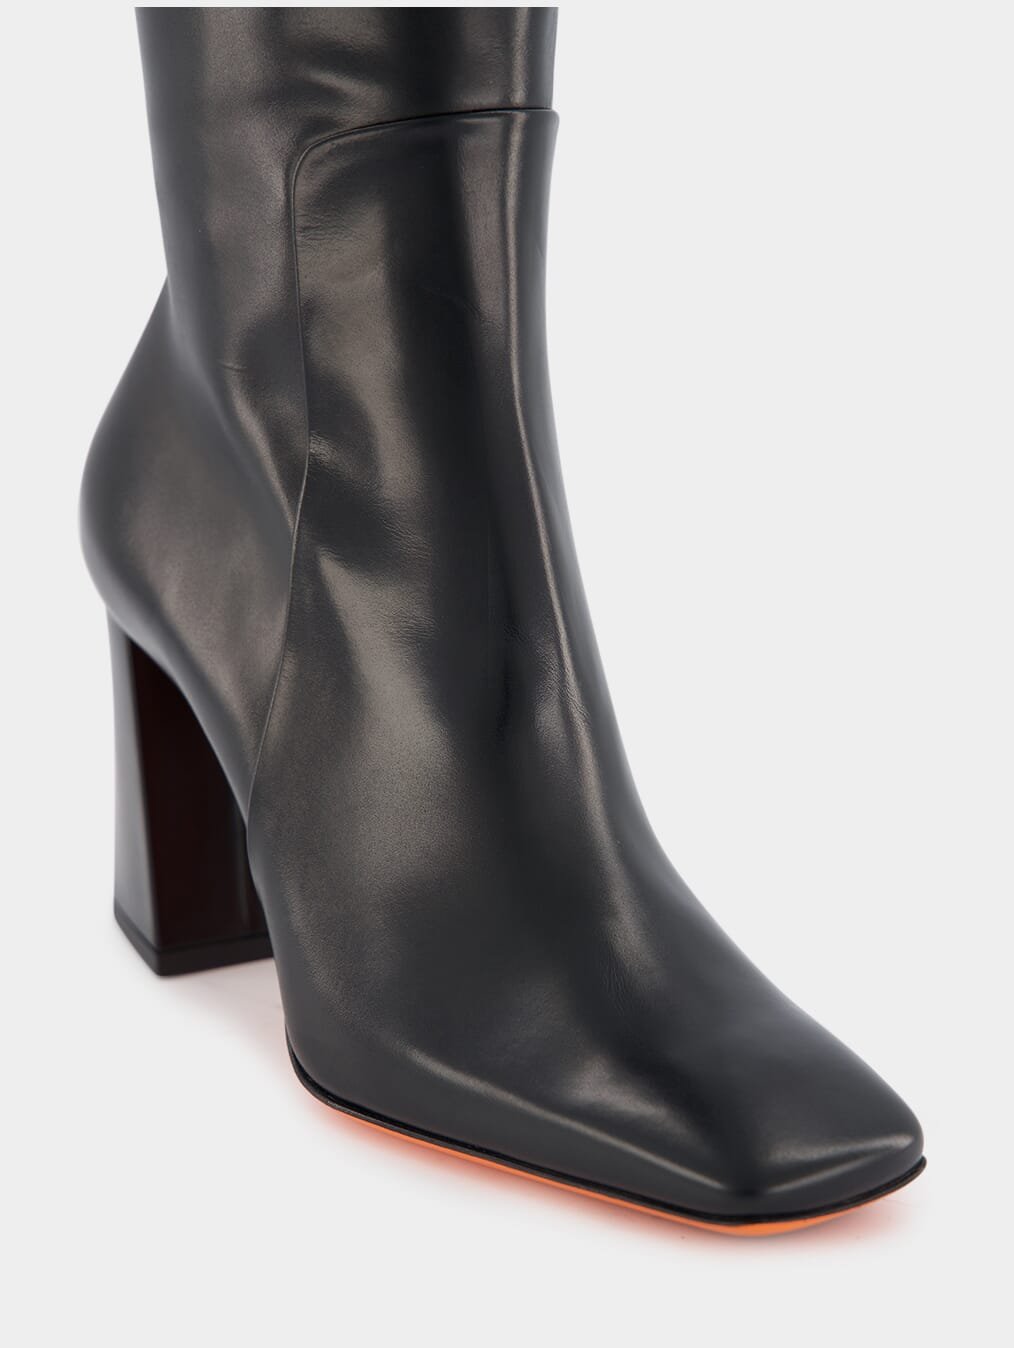 Santoni85mm Square-Toe Leather Boots at Fashion Clinic